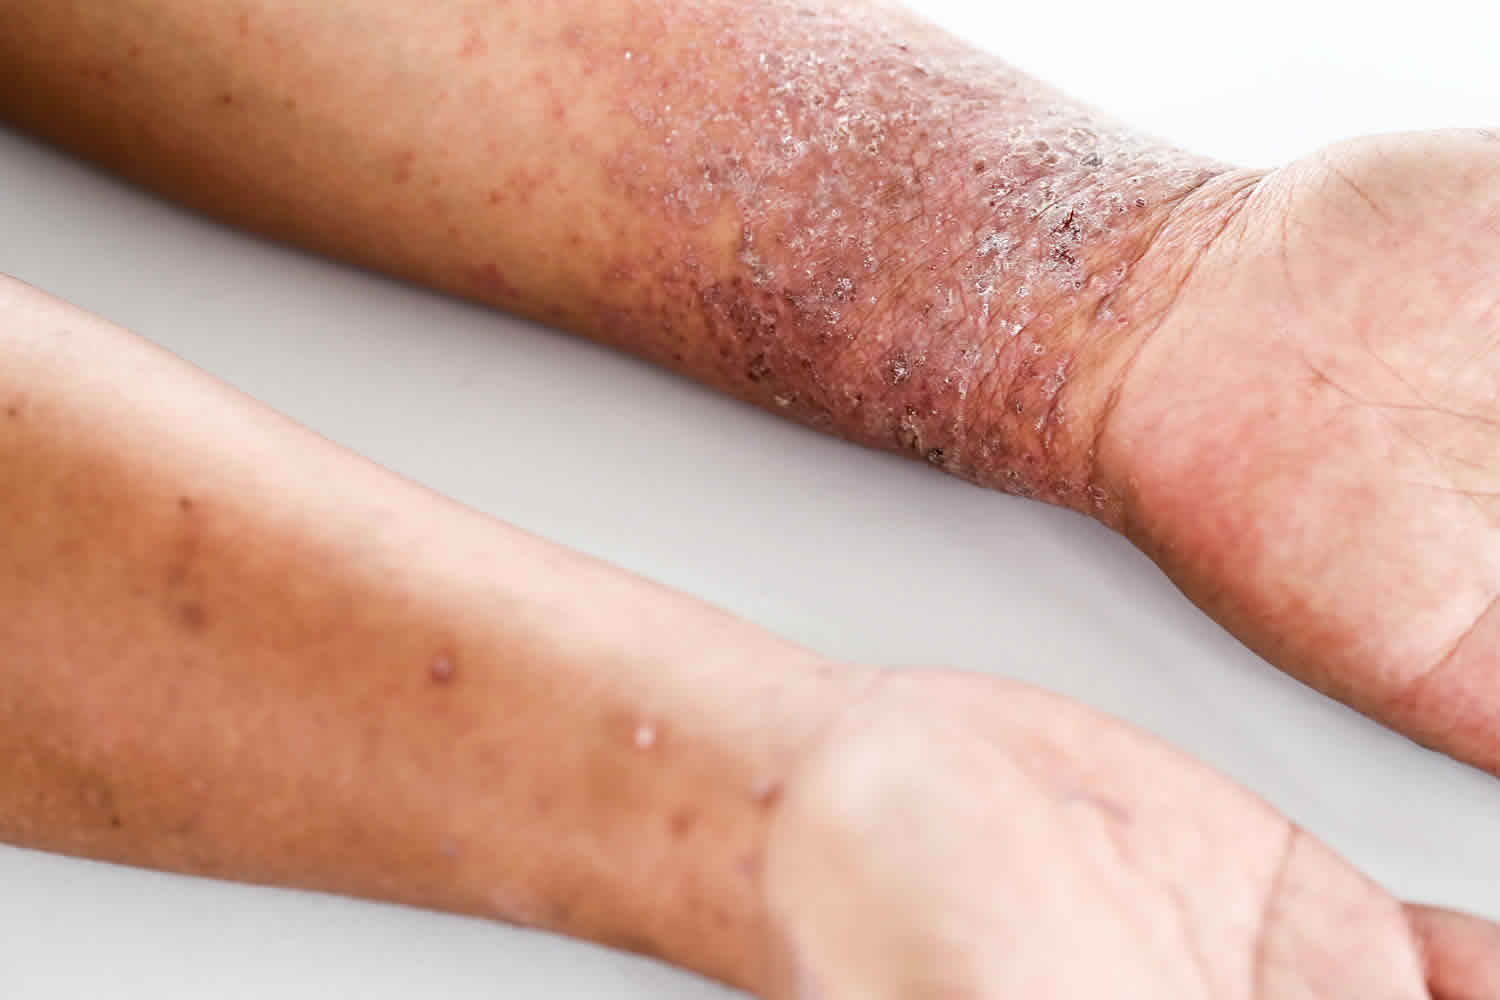 patient journey in atopic dermatitis the real world scenario